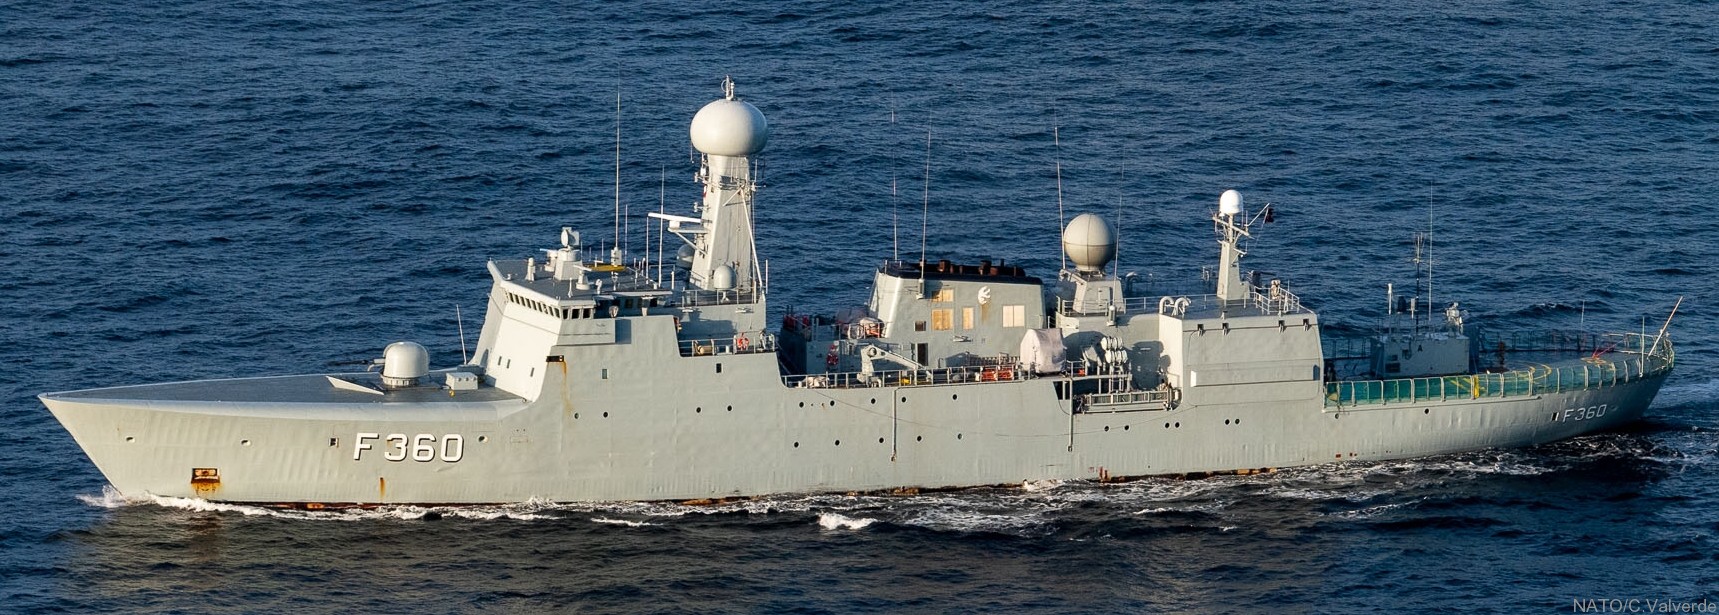 f-360 hdms hvidbjornen thetis class ocean patrol frigate royal danish navy kongelige danske marine kdm inspektionsskibet 38